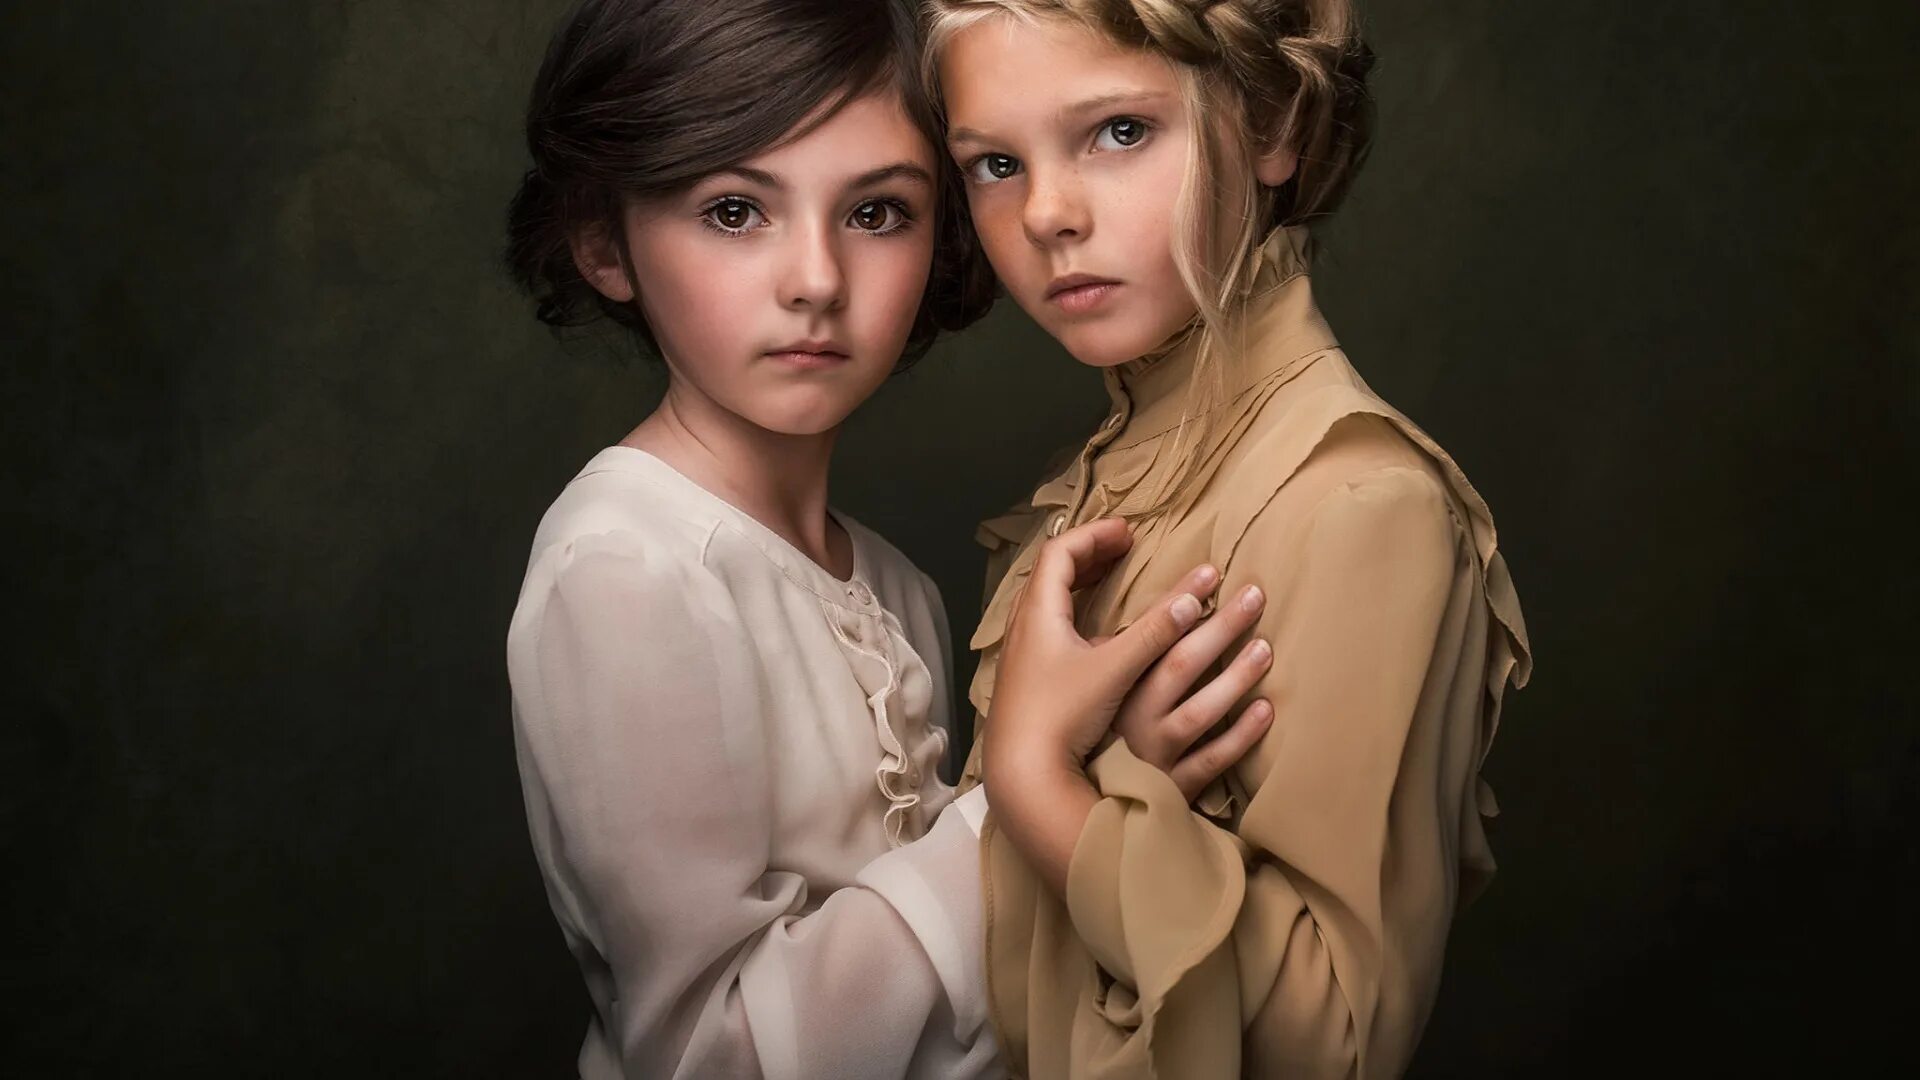 I like little girls. Паулина Дучман. Паулина Дучман фотограф. Фотограф Paulina Duczman. Две сестры фотопортрет.